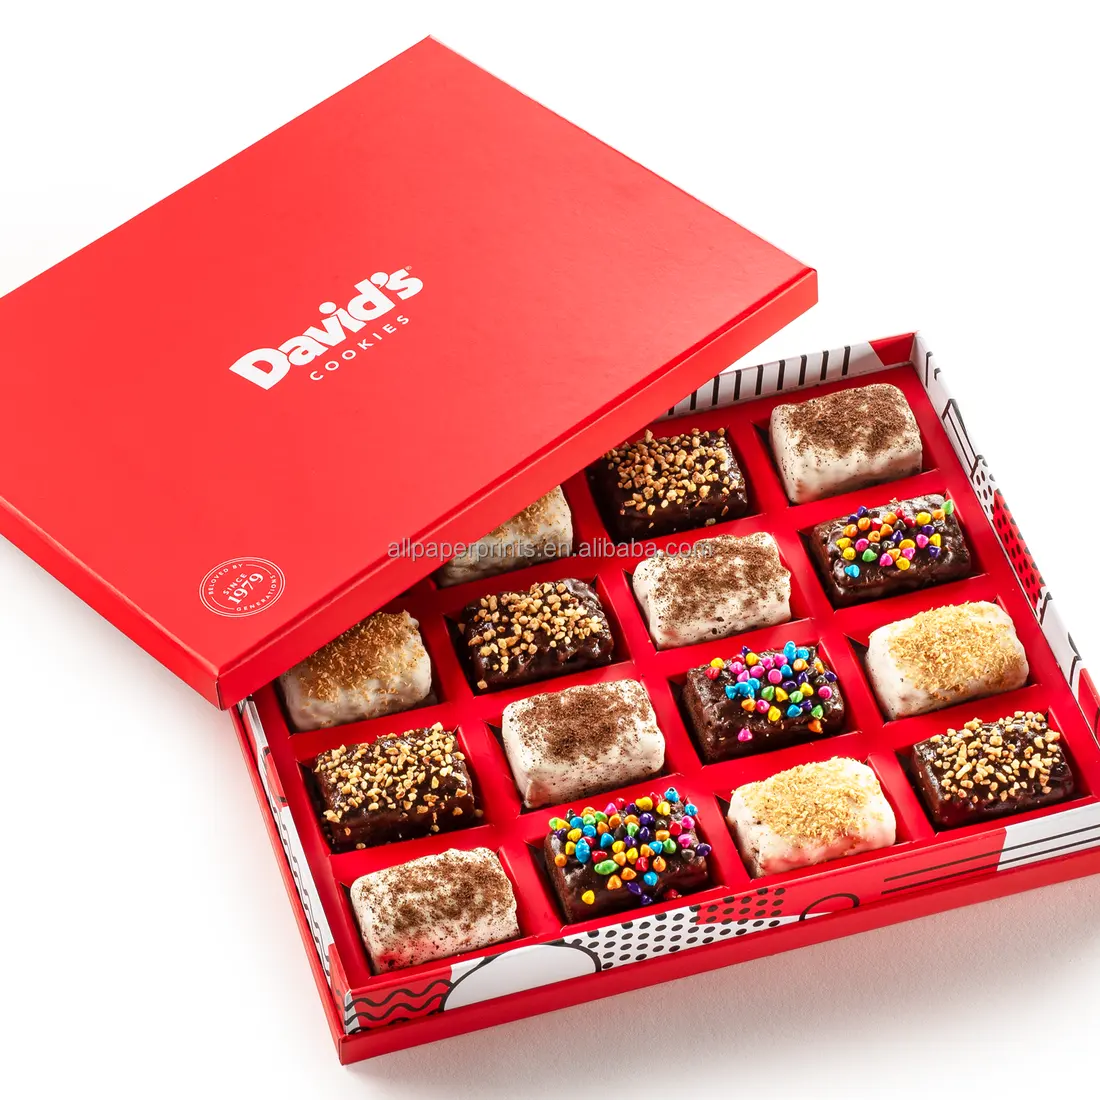 Gourmet-Schokolade Danke Gourmet Italienische Schokolade Schokolade bedeckt Brownie Bite Geschenk box